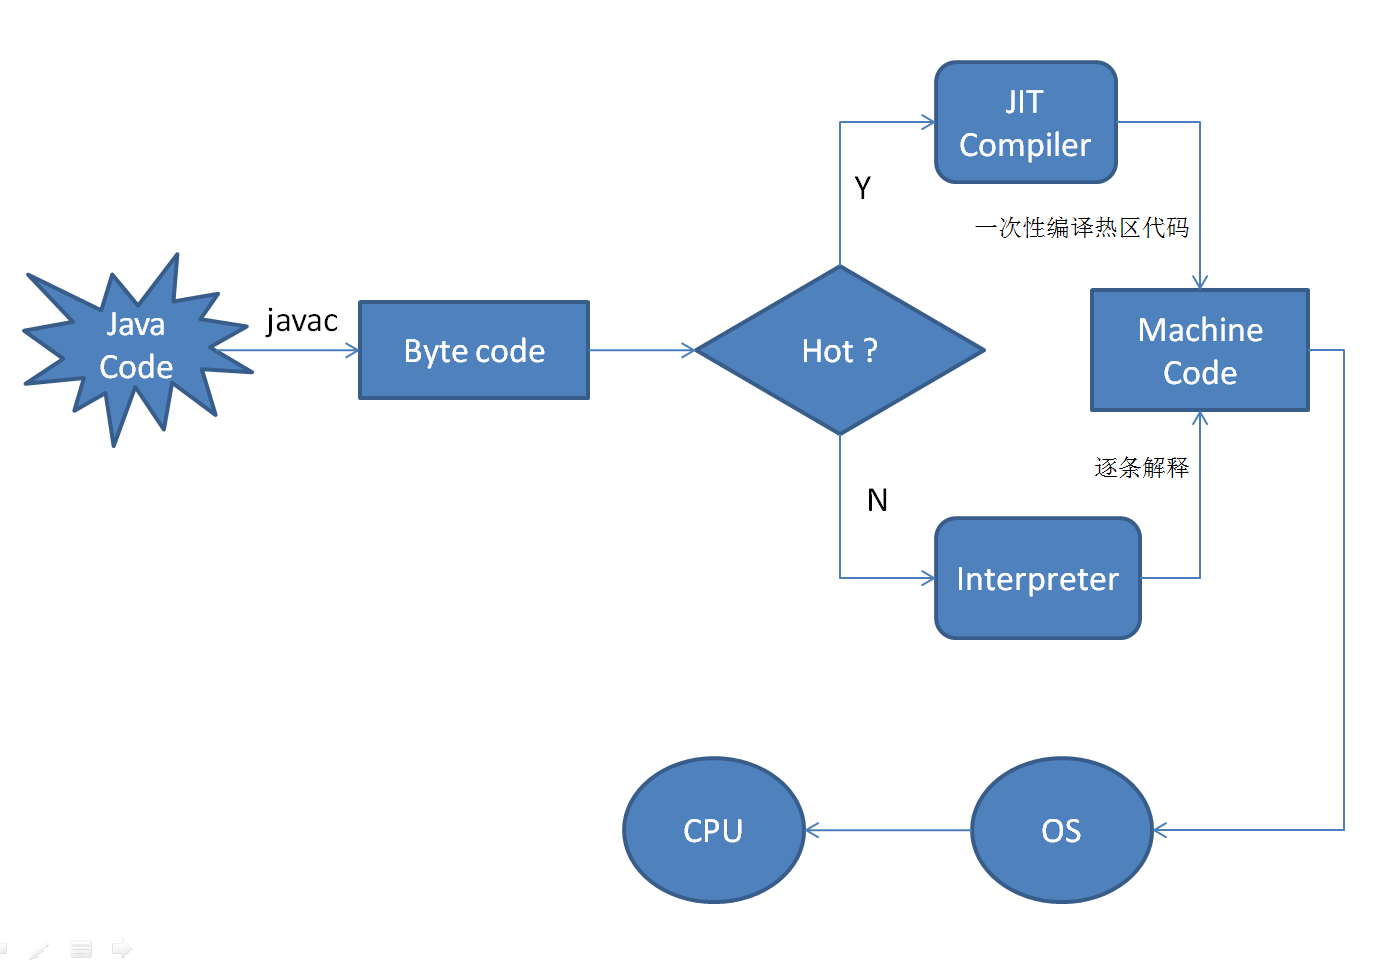 Compile source. JVM компилятор. Jit компилятор. Компиляция java схема. Компилятор java.